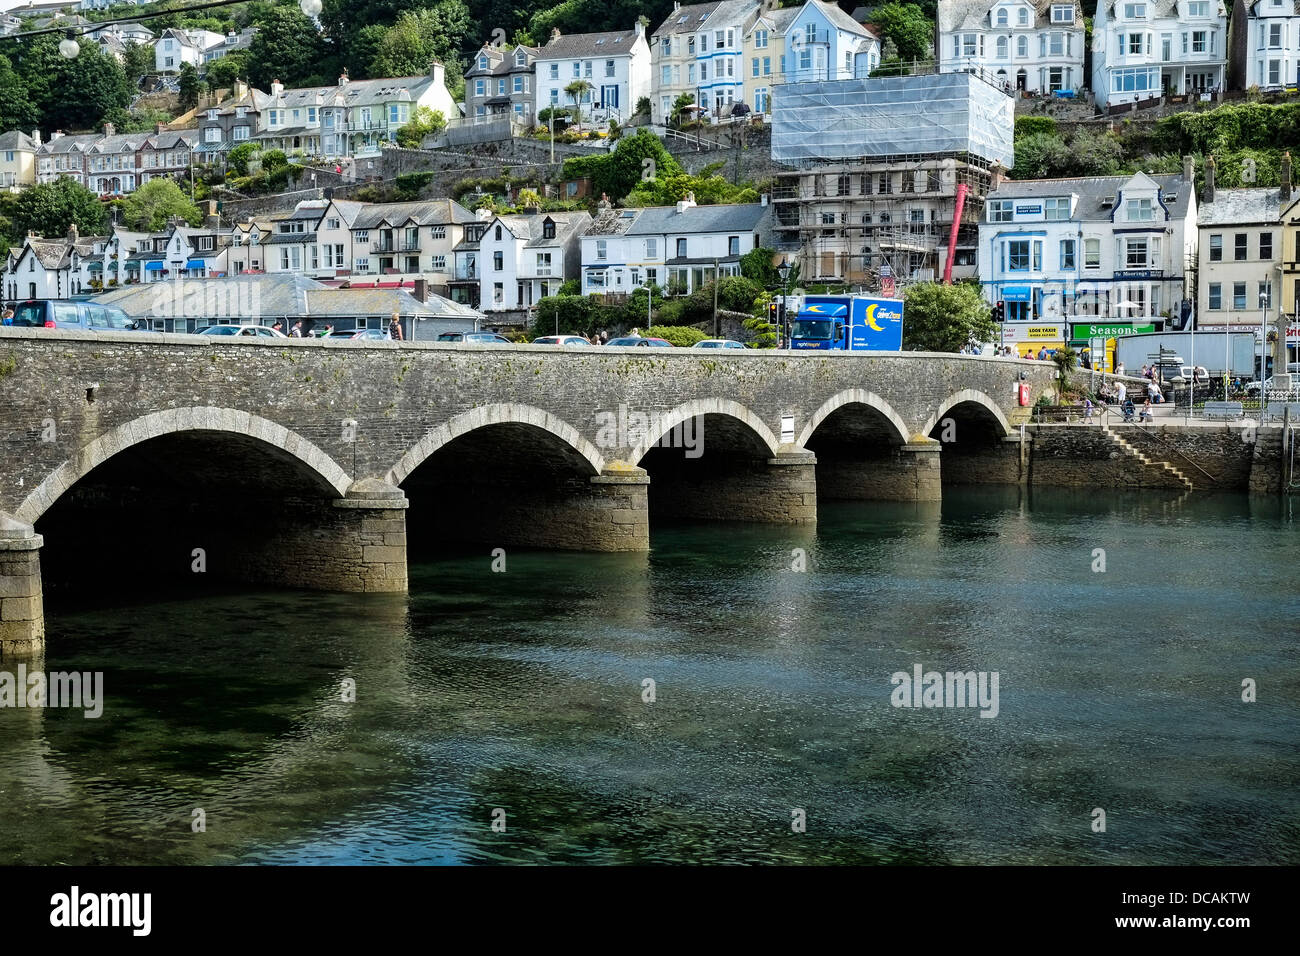 The bridge over the River Looe in Cornwall. Stock Photo